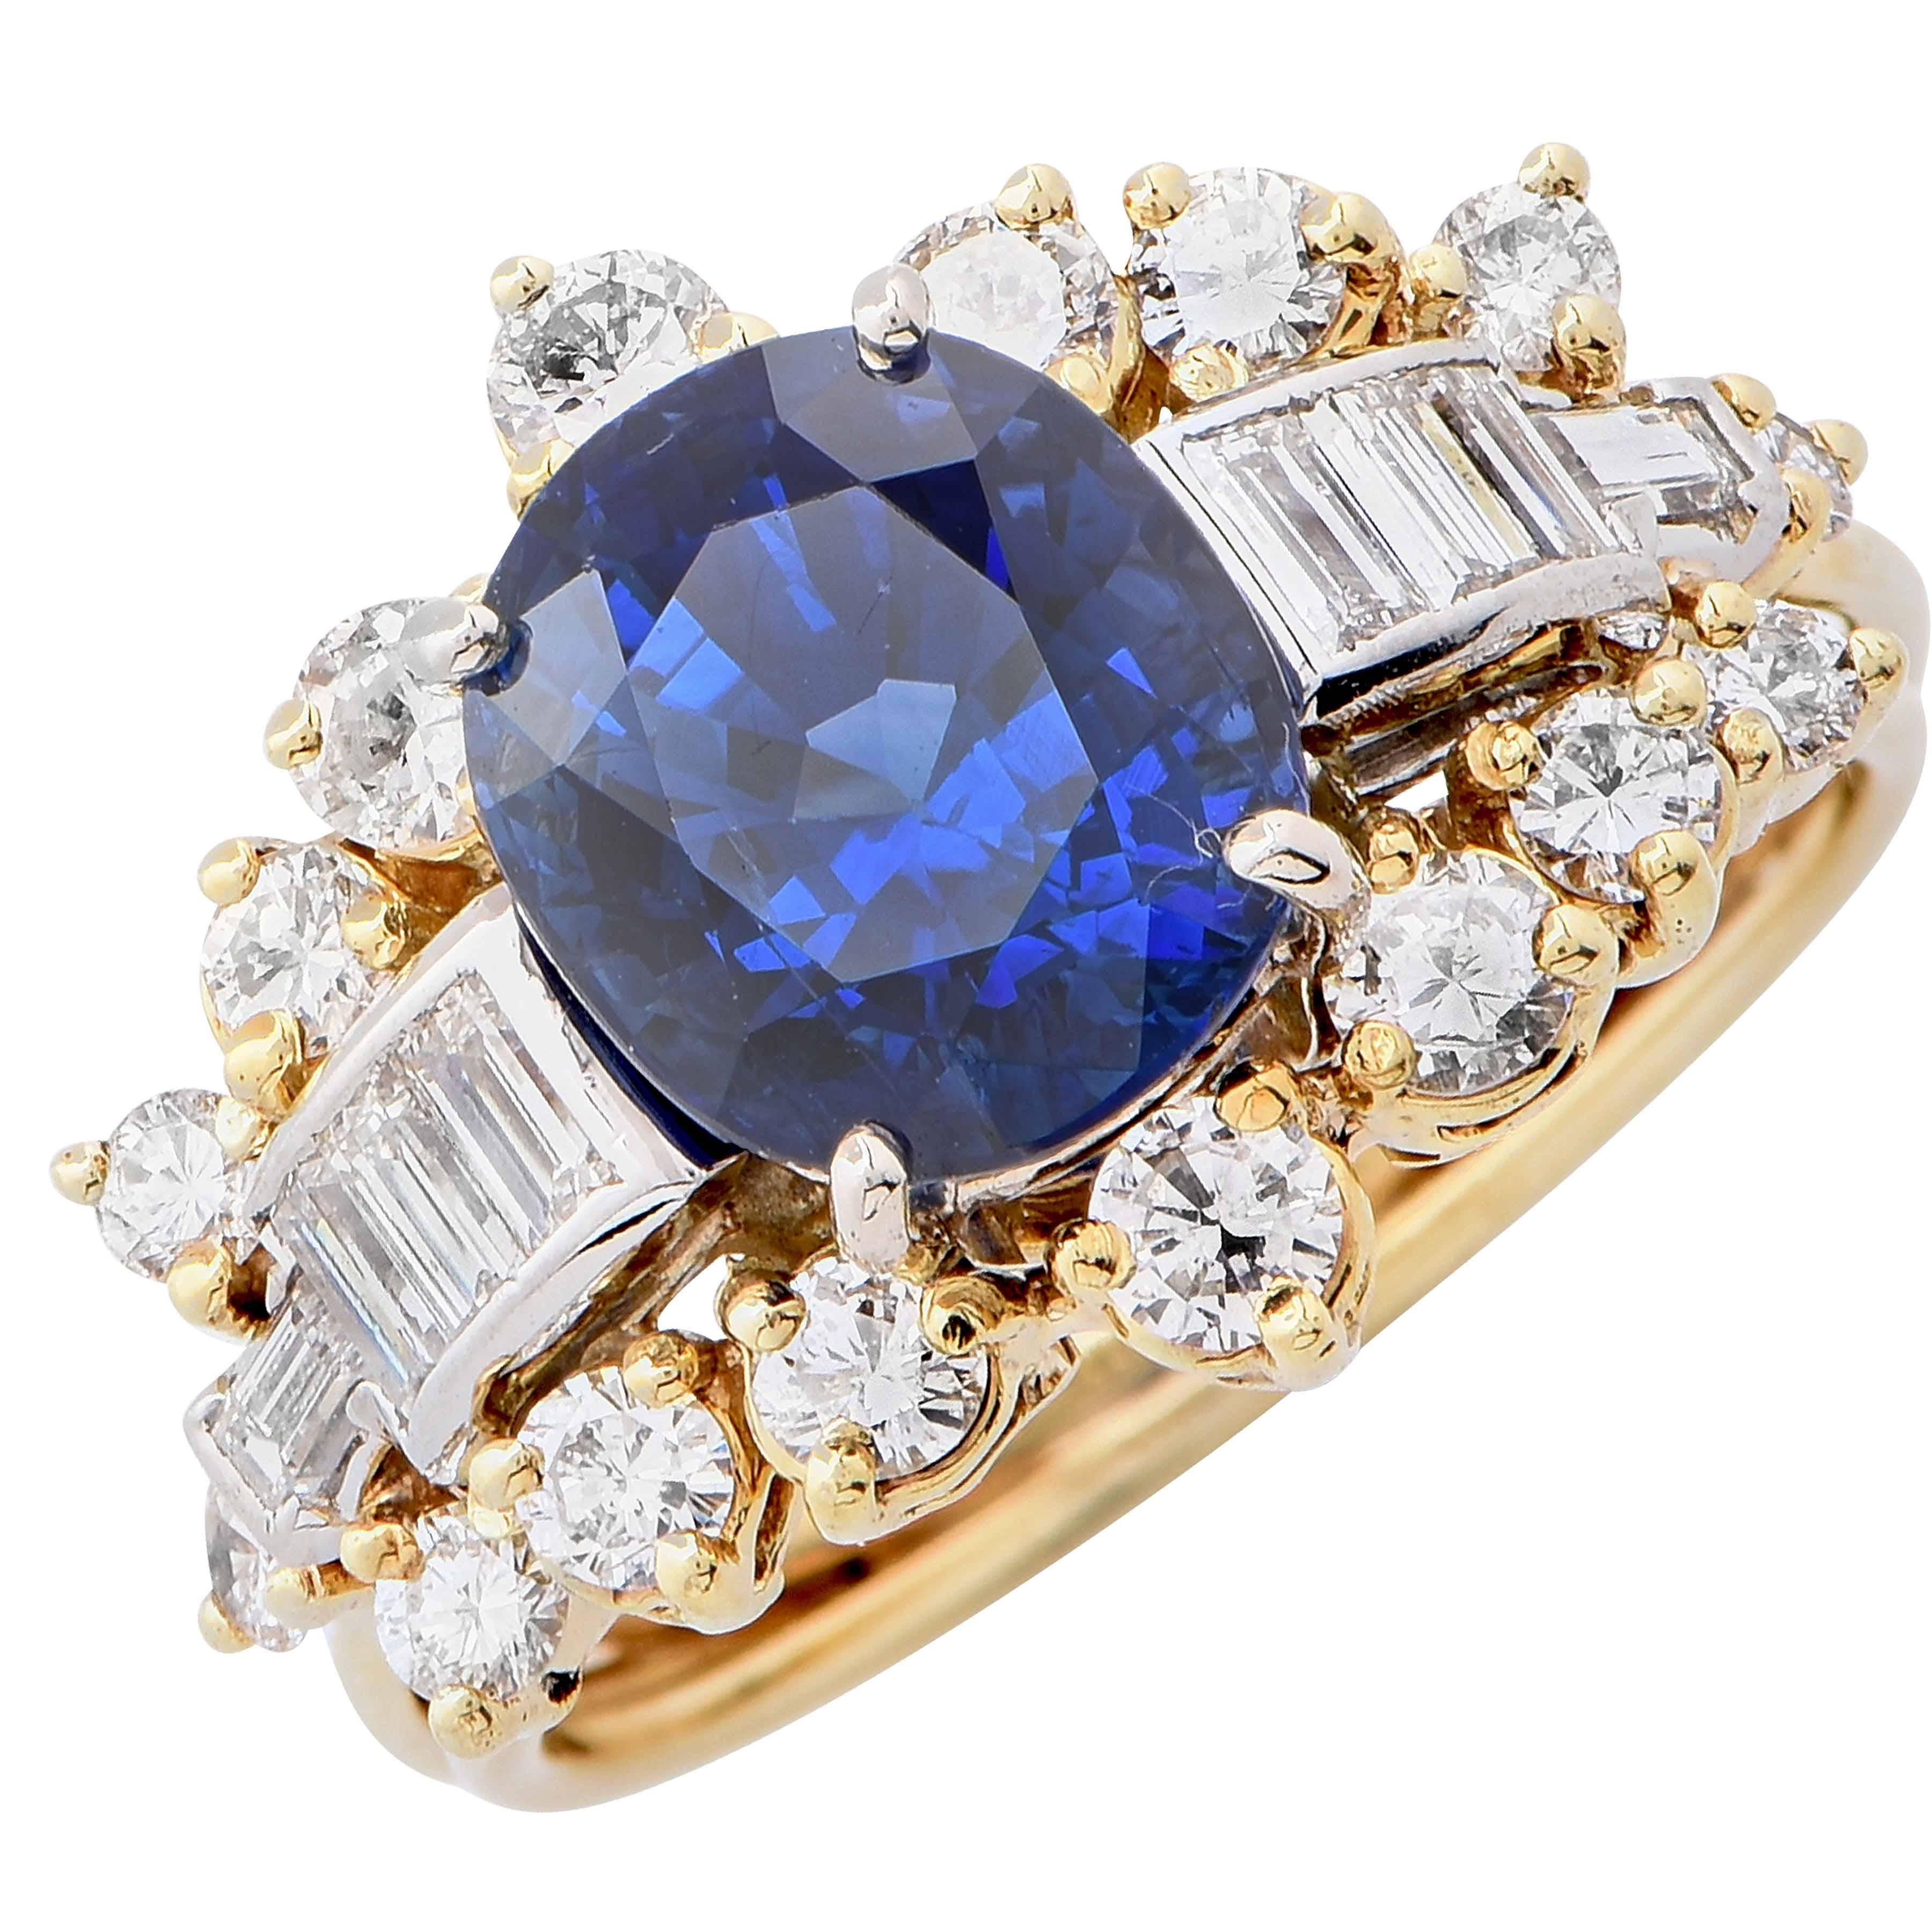 3.35 Carat Natural Oval Sapphire Diamond 18 Karat Yellow Gold Ring